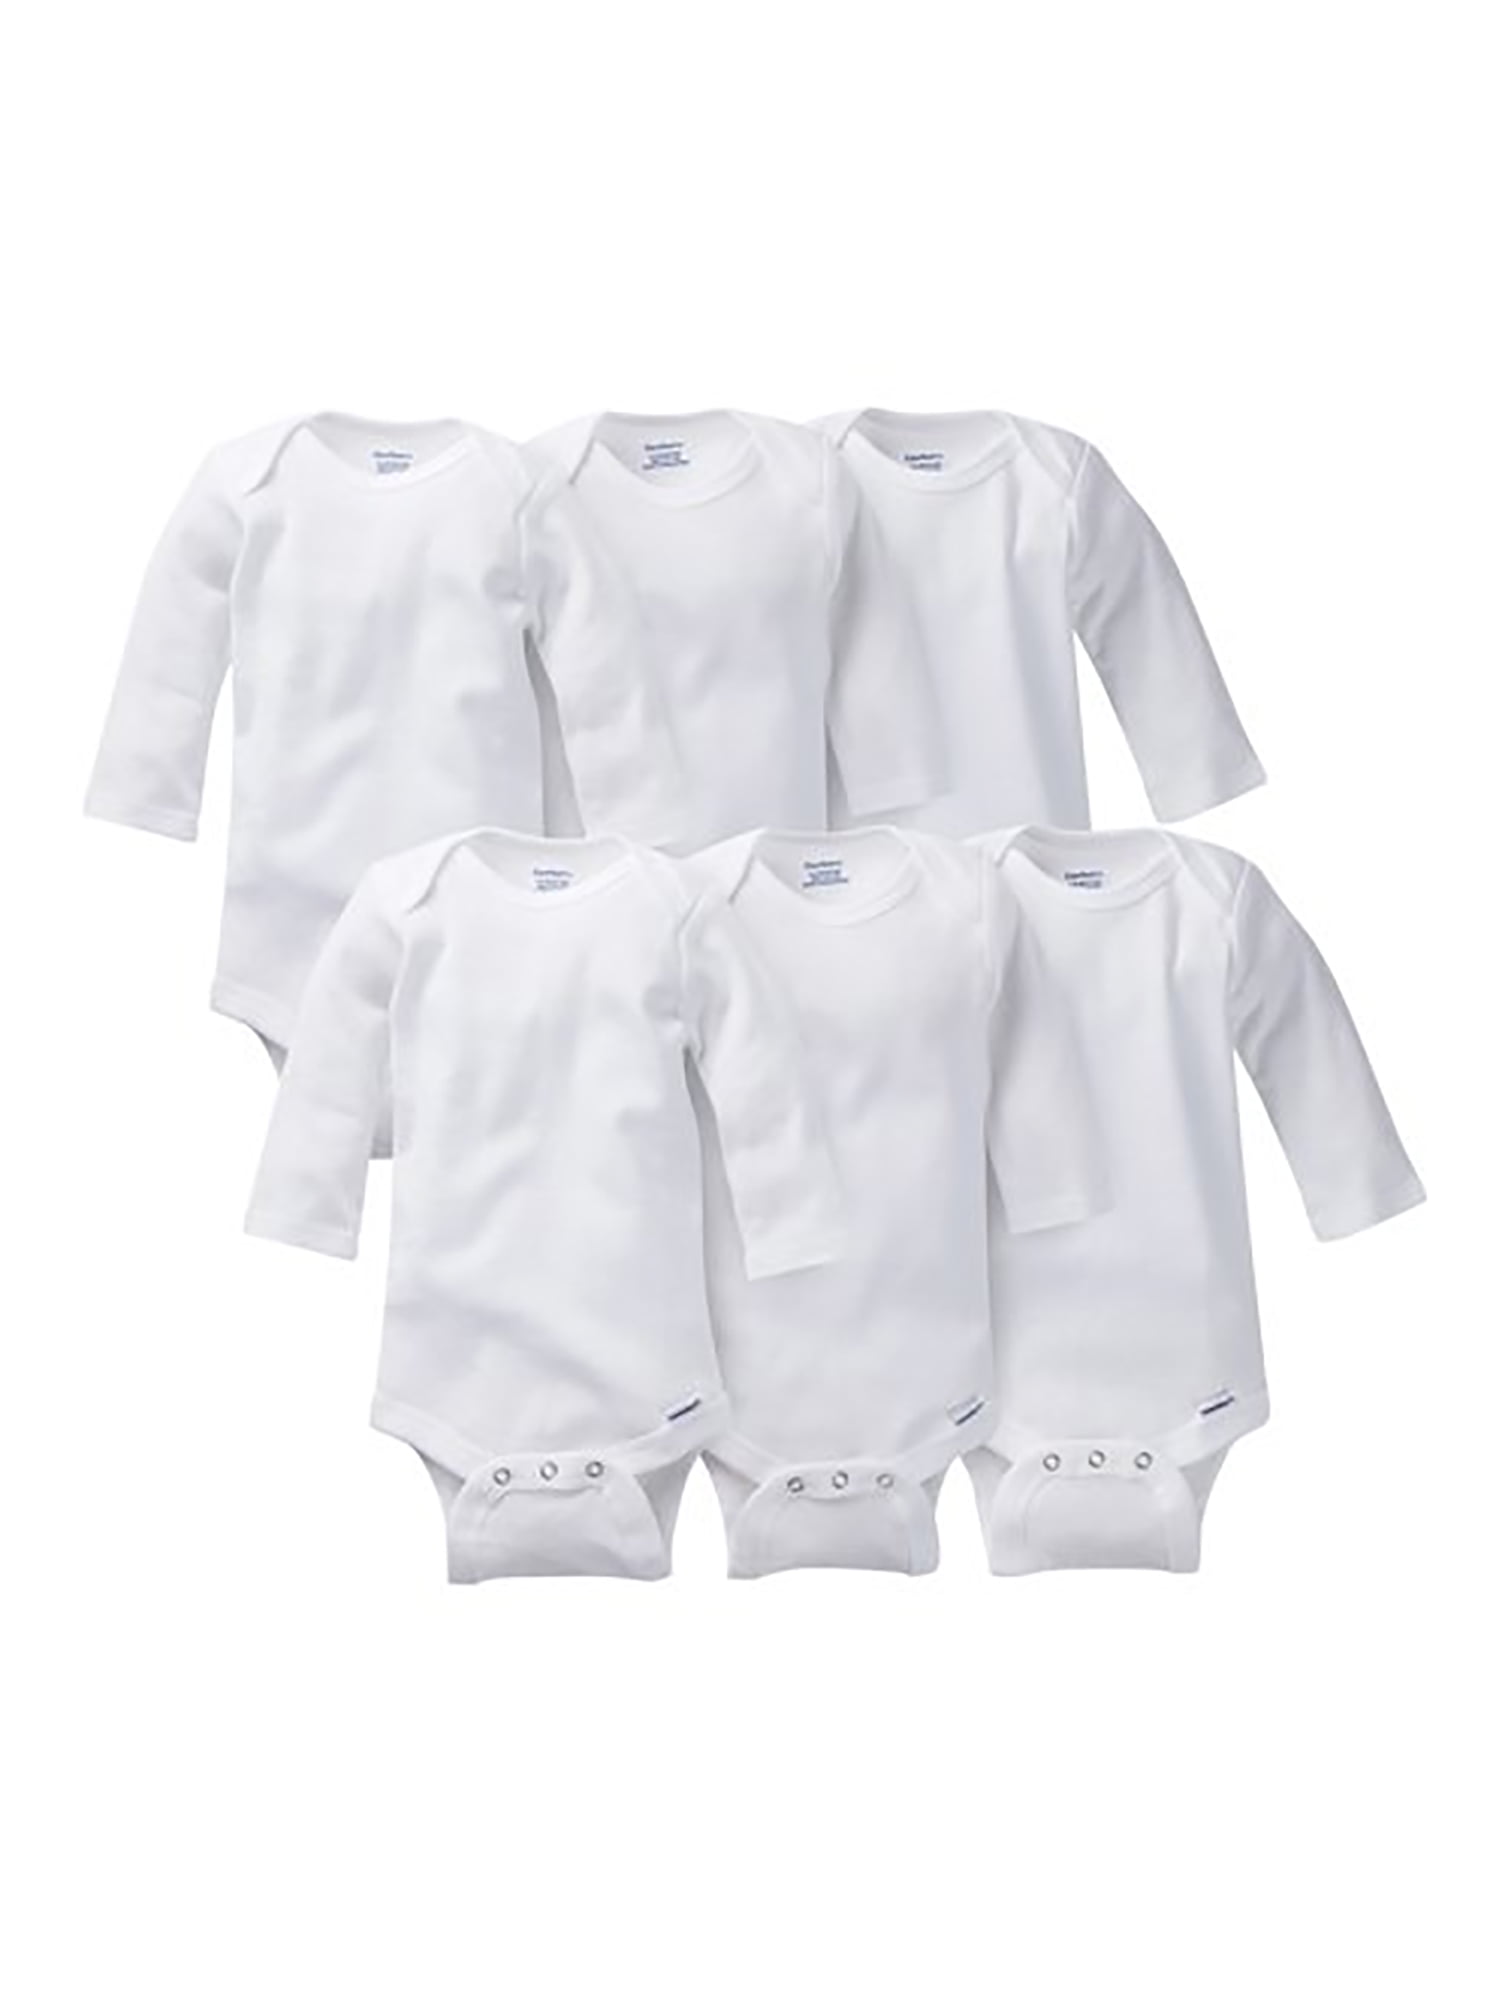 Essentials Unisex-Baby 6-Pack Lap-Shoulder Tee T-Shirt Set